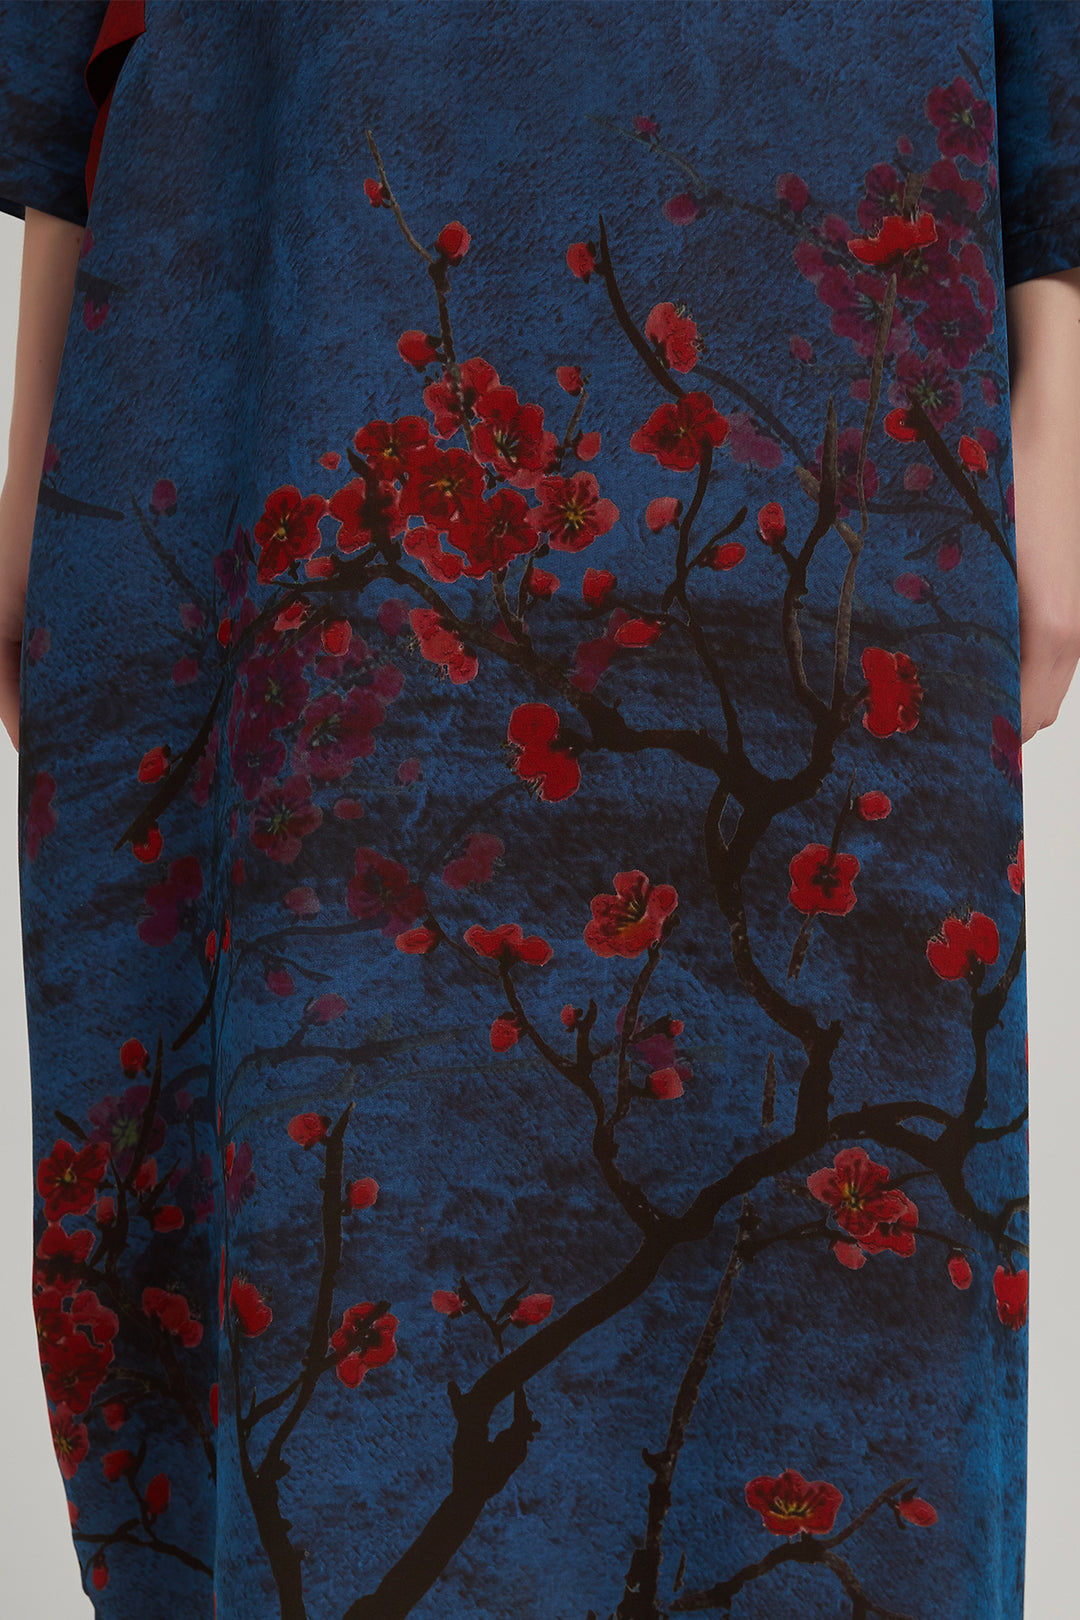 Ref Retro Artistic Print Silk Dress